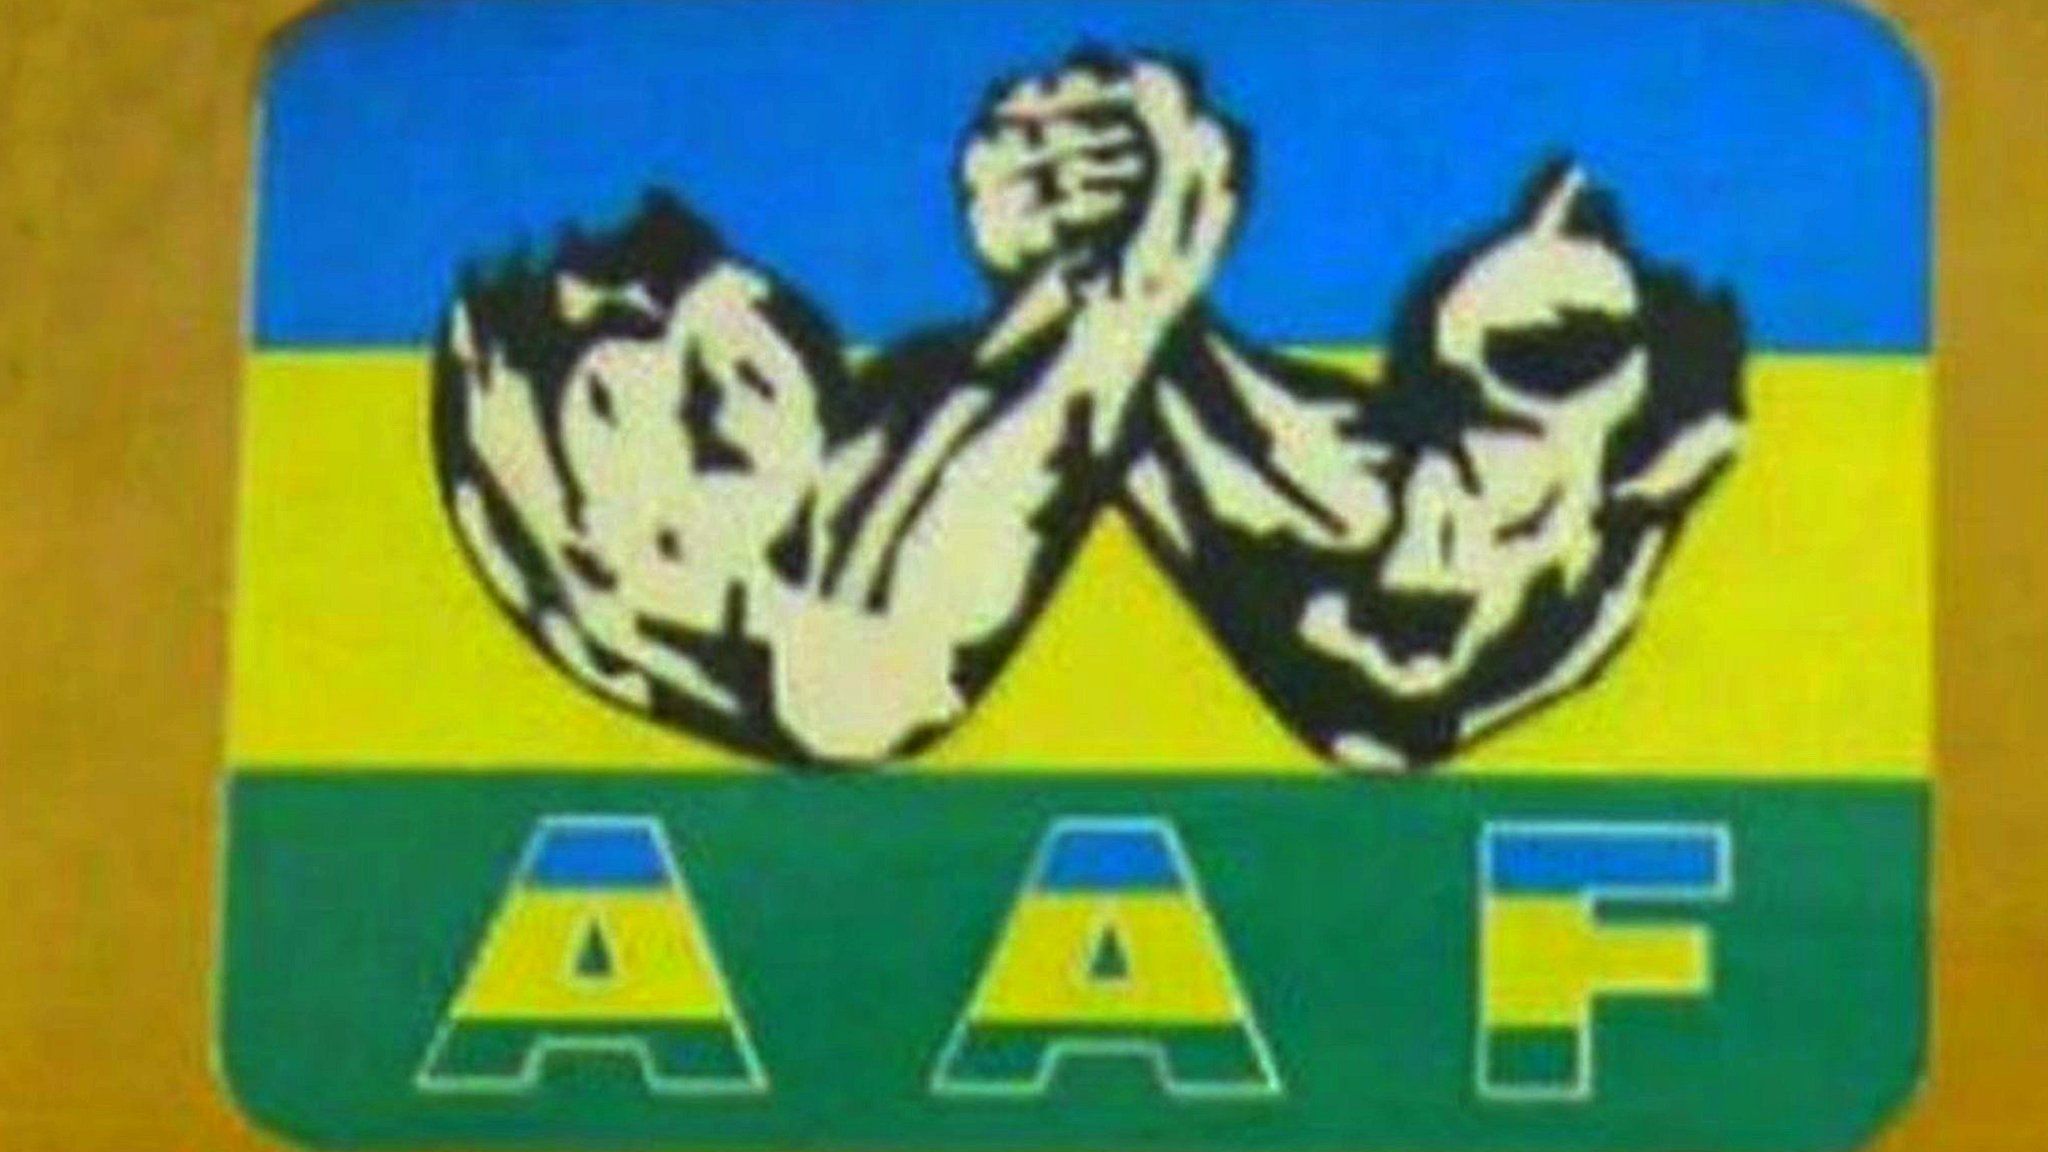 Azerbaijan Arm wrestling Federation